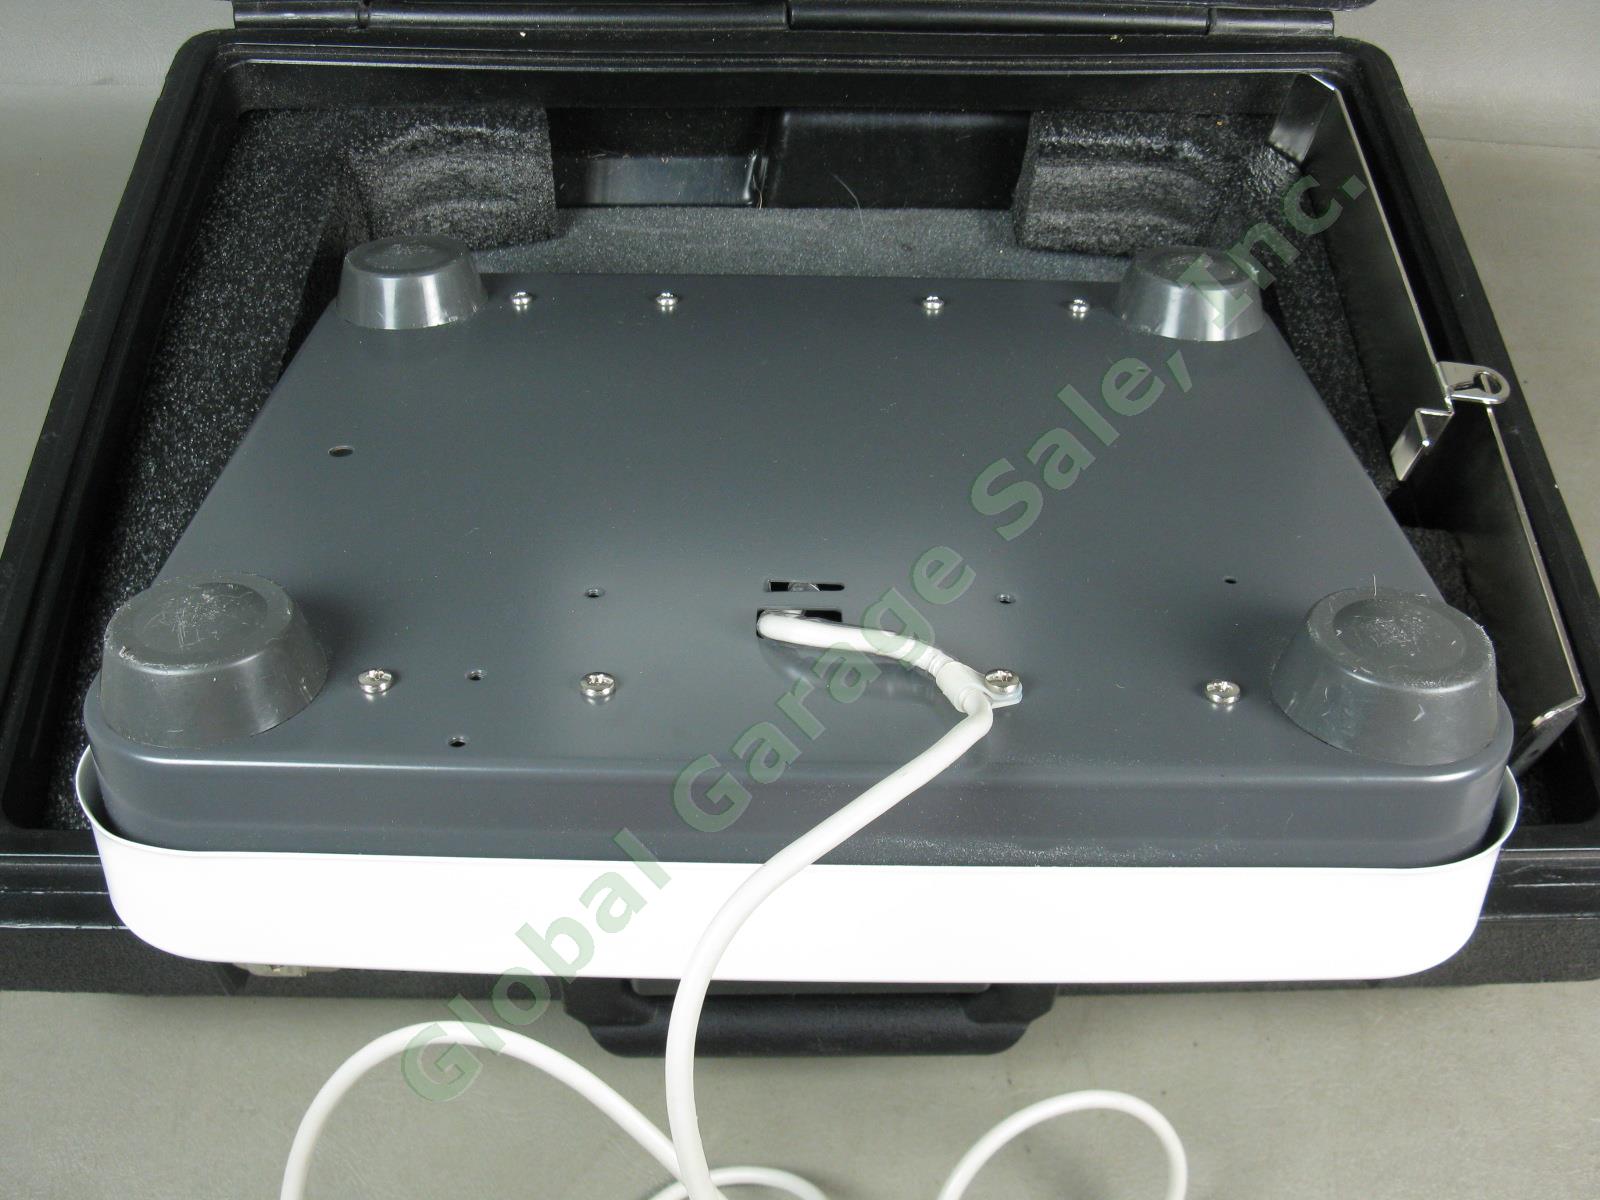 Tanita BWB-800A Digital Electronic Medical Scale 440lb W/ Remote Display Case ++ 6